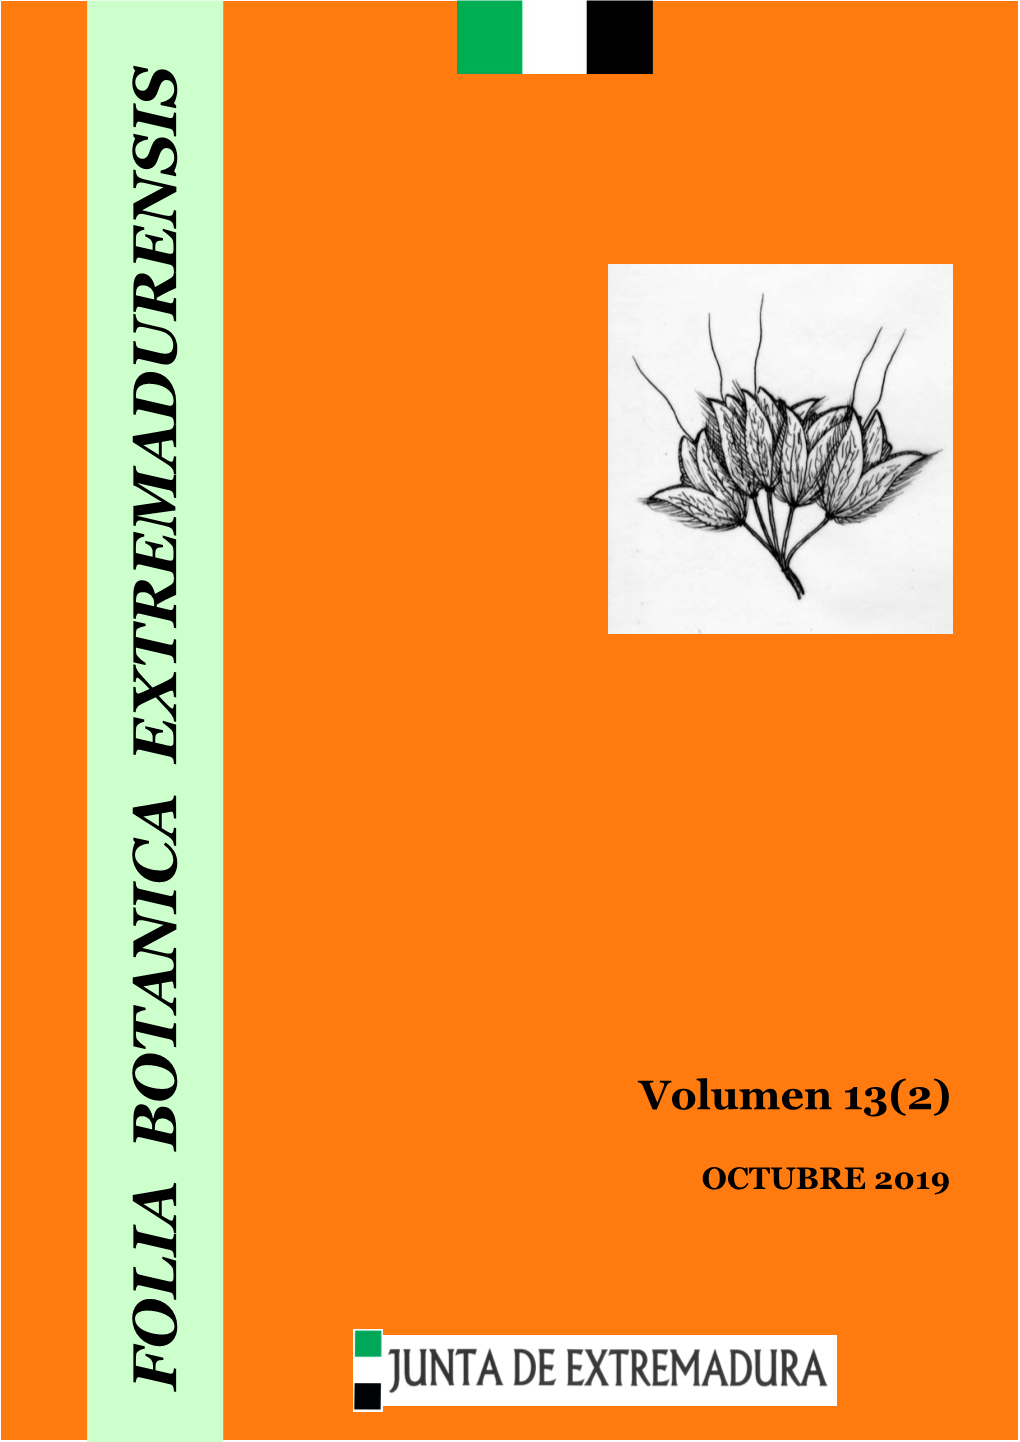 Folia Botanica Extremadurensis, 13(2), 2019